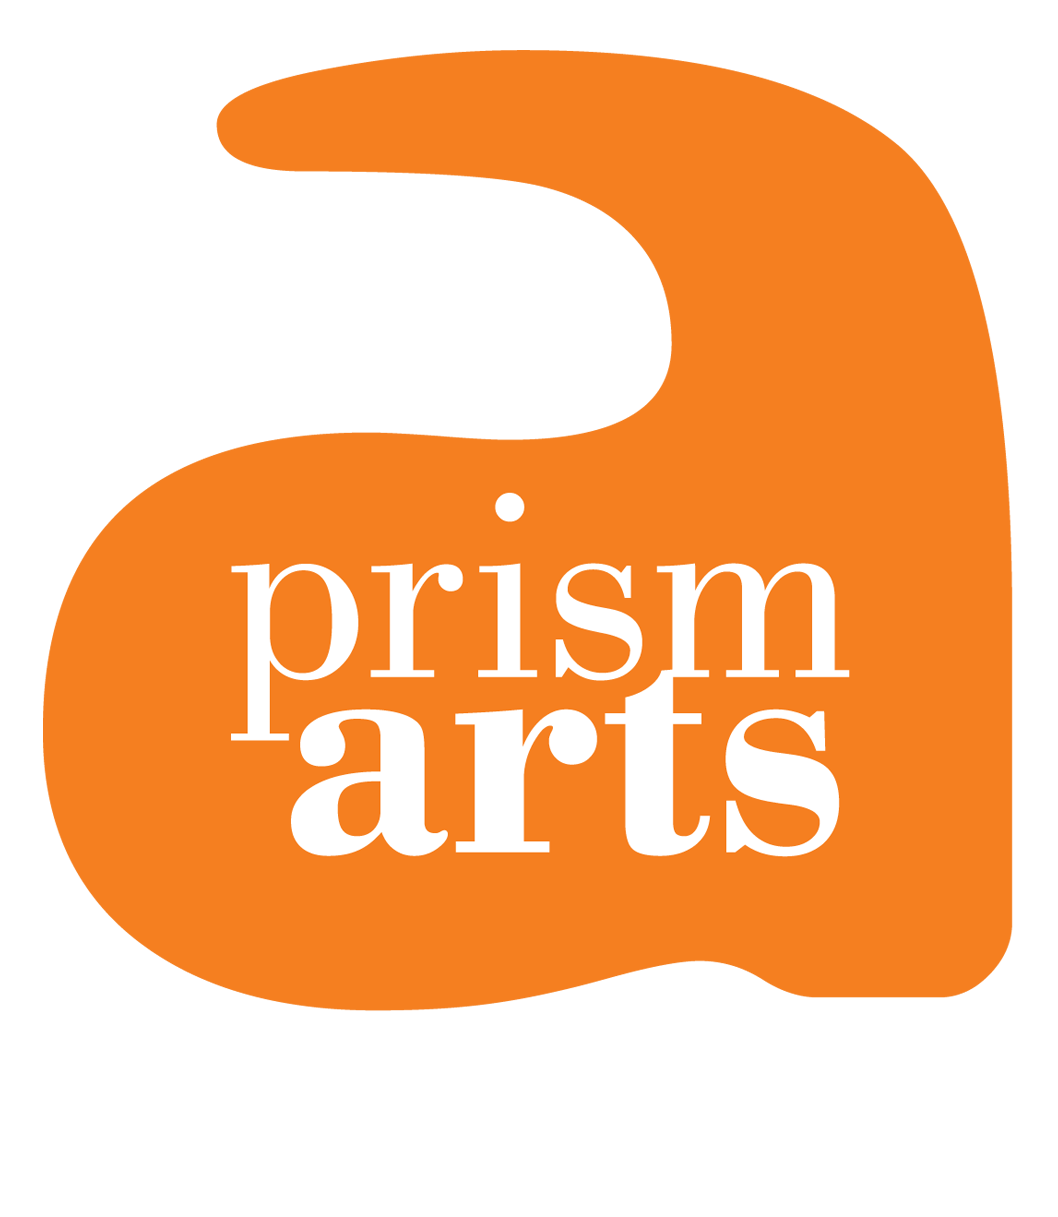 Capturing rigorous data on Prism Arts' impact